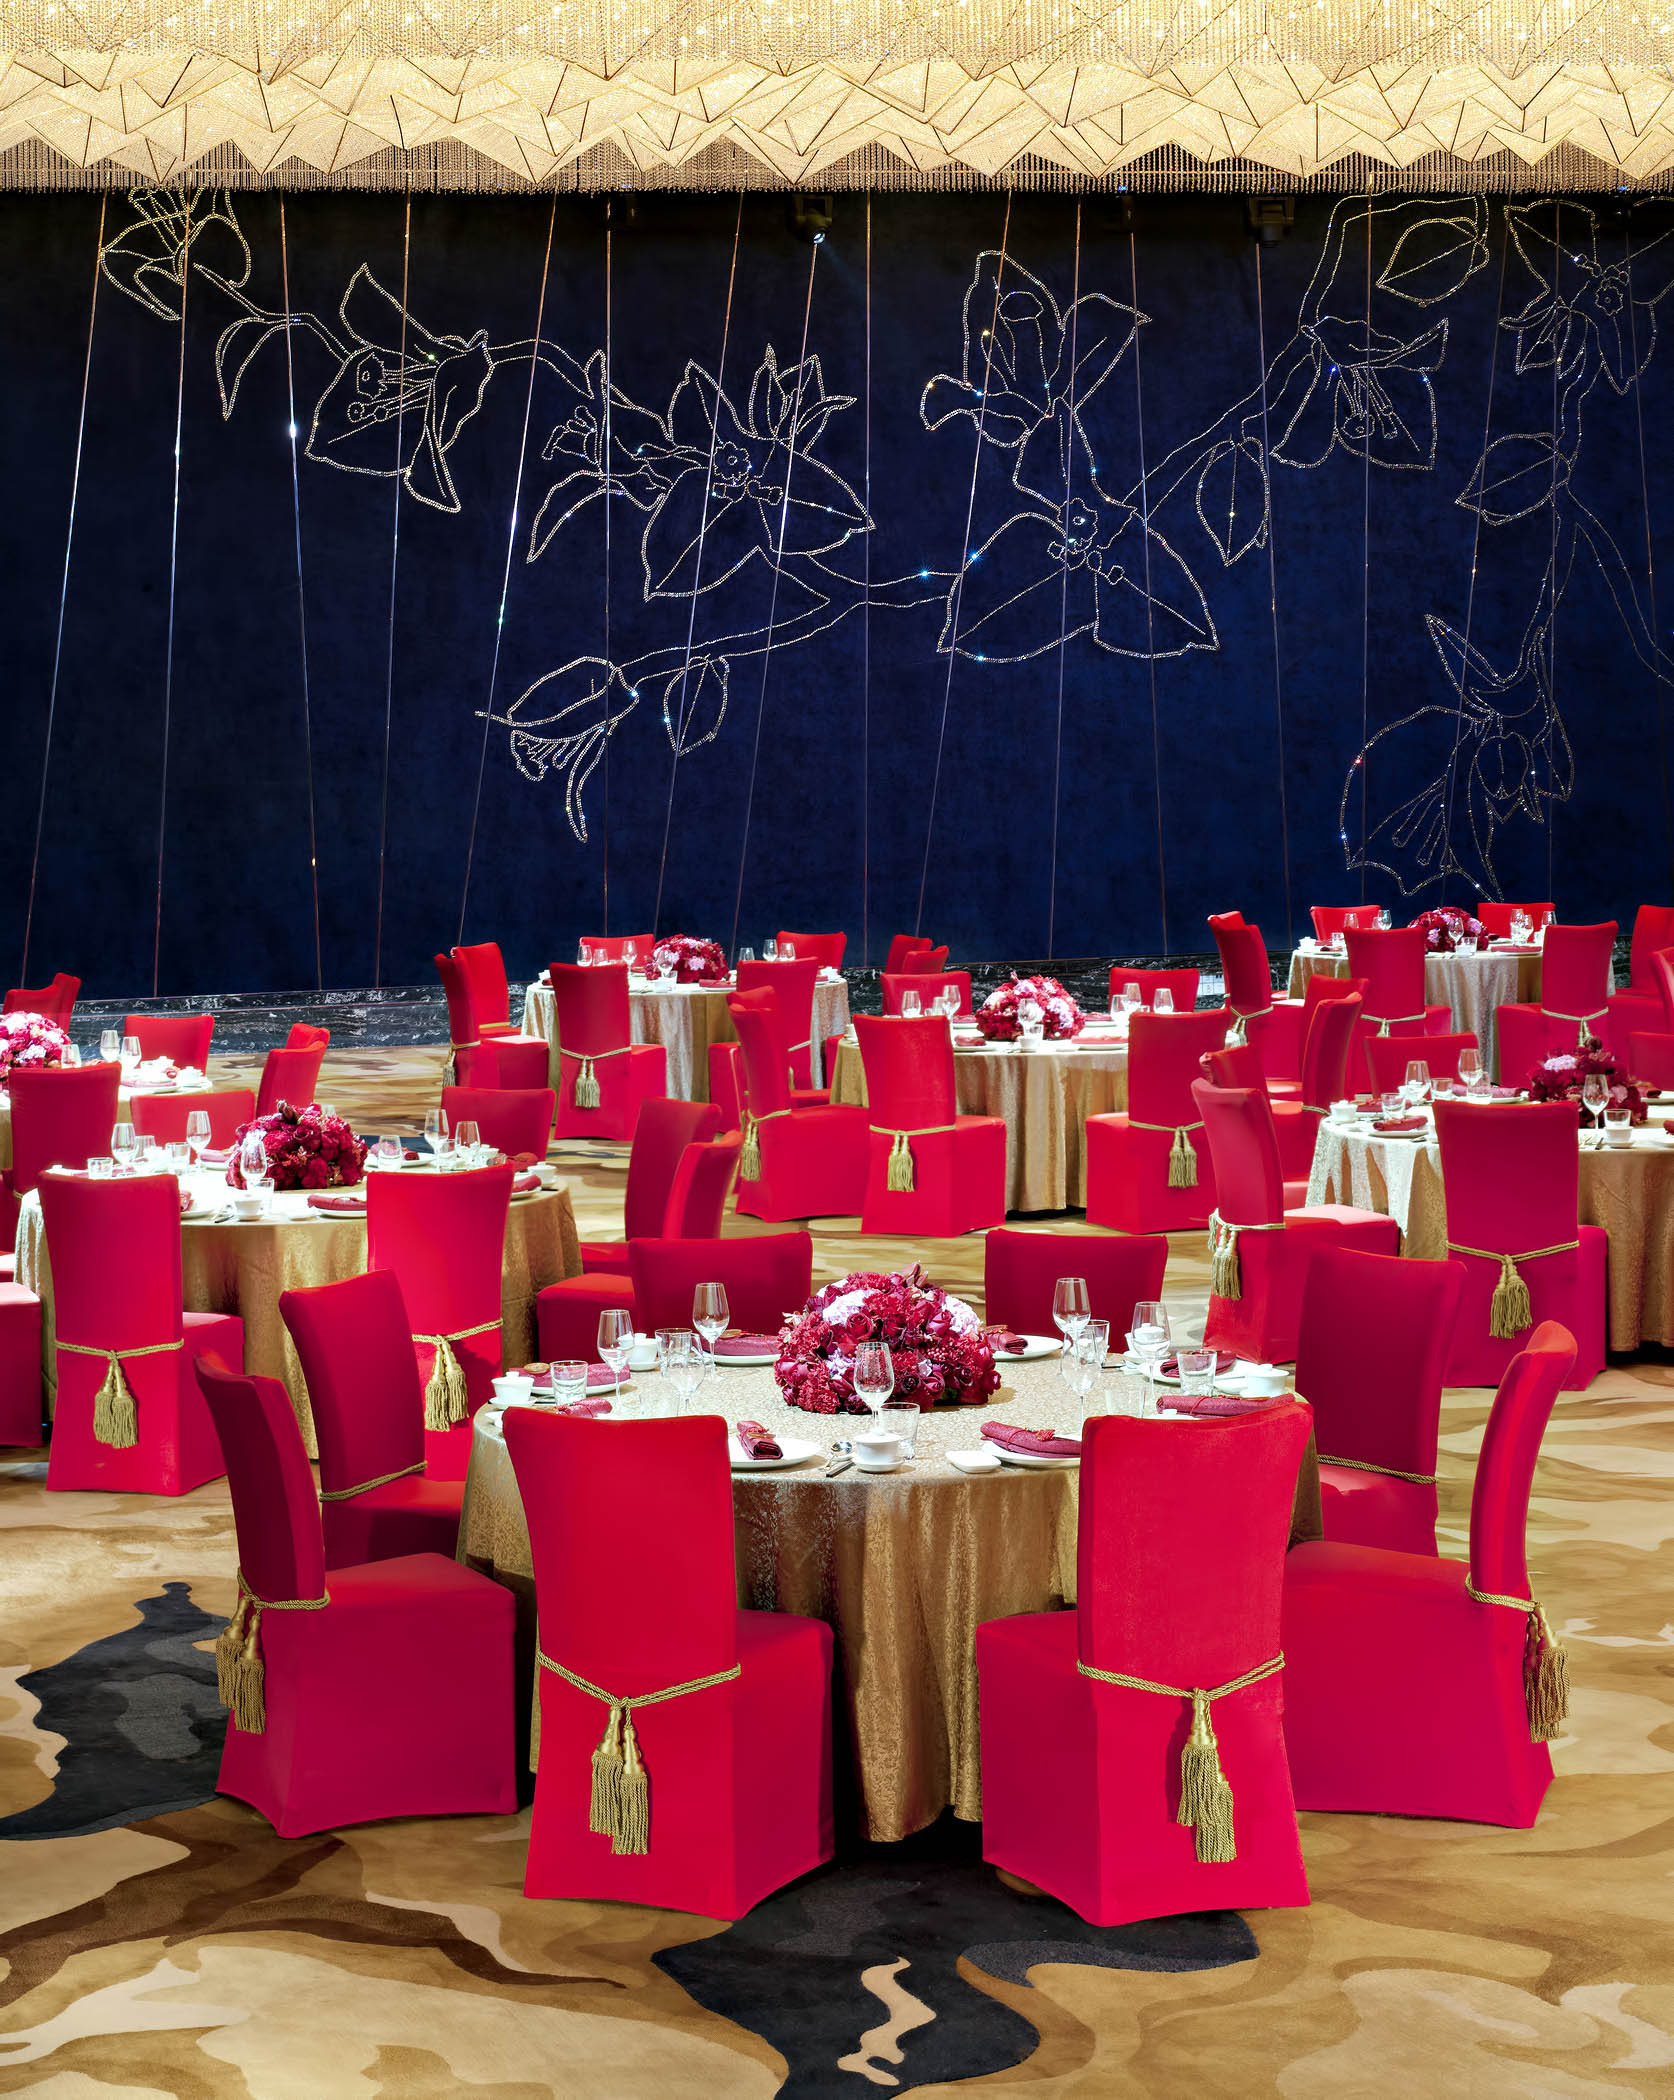 The St. Regis Shenzhen Hotel - Shenzhen, China - Ballroom Dinner Setup